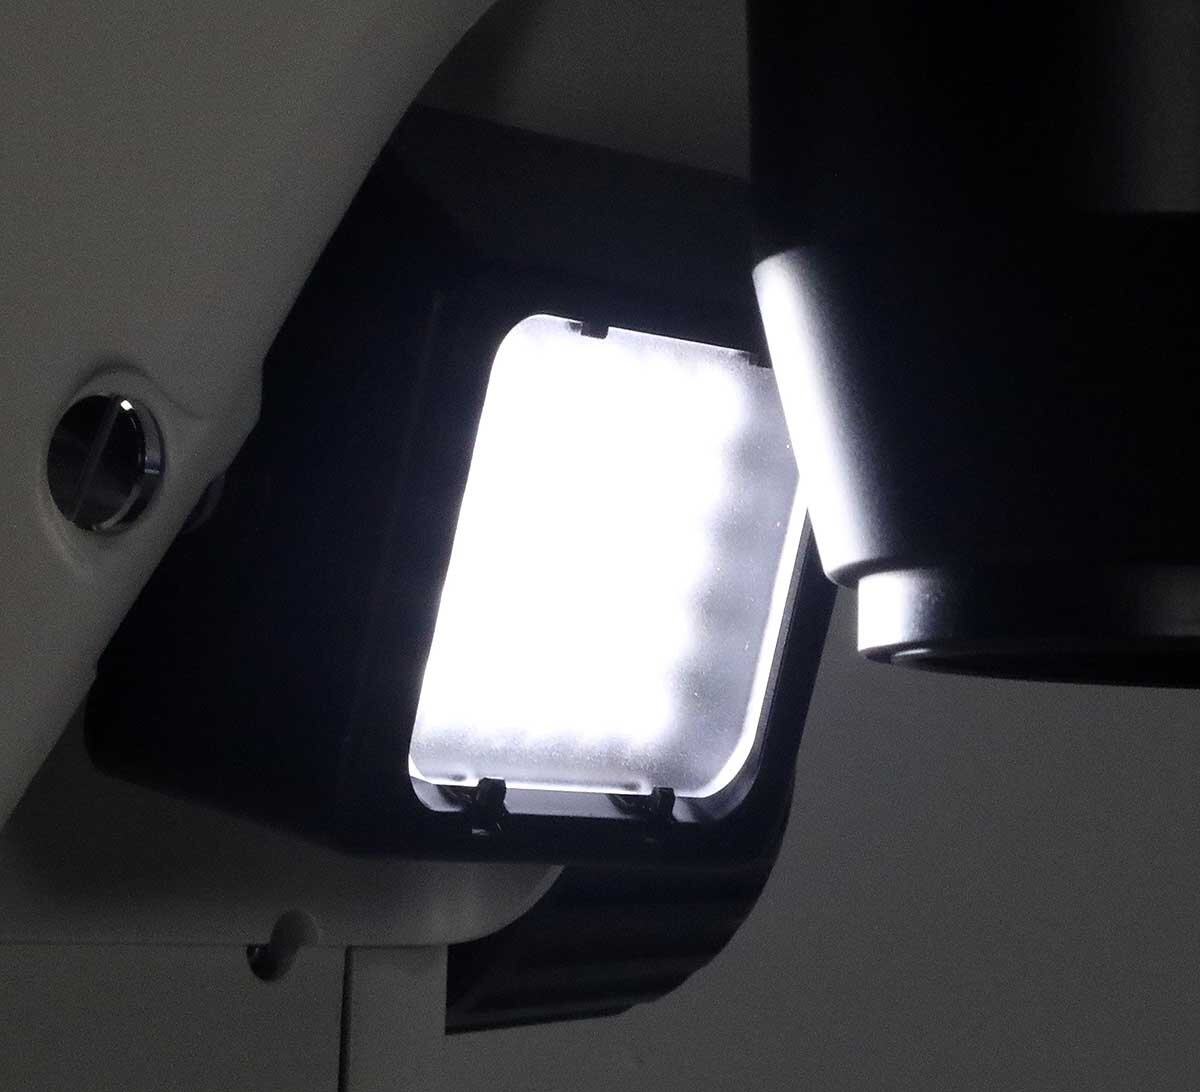 OLYMPUS コンパクト実体顕微鏡 SZ61TR LED照明架台SZ2-ILST 付き【中古】□_画像6